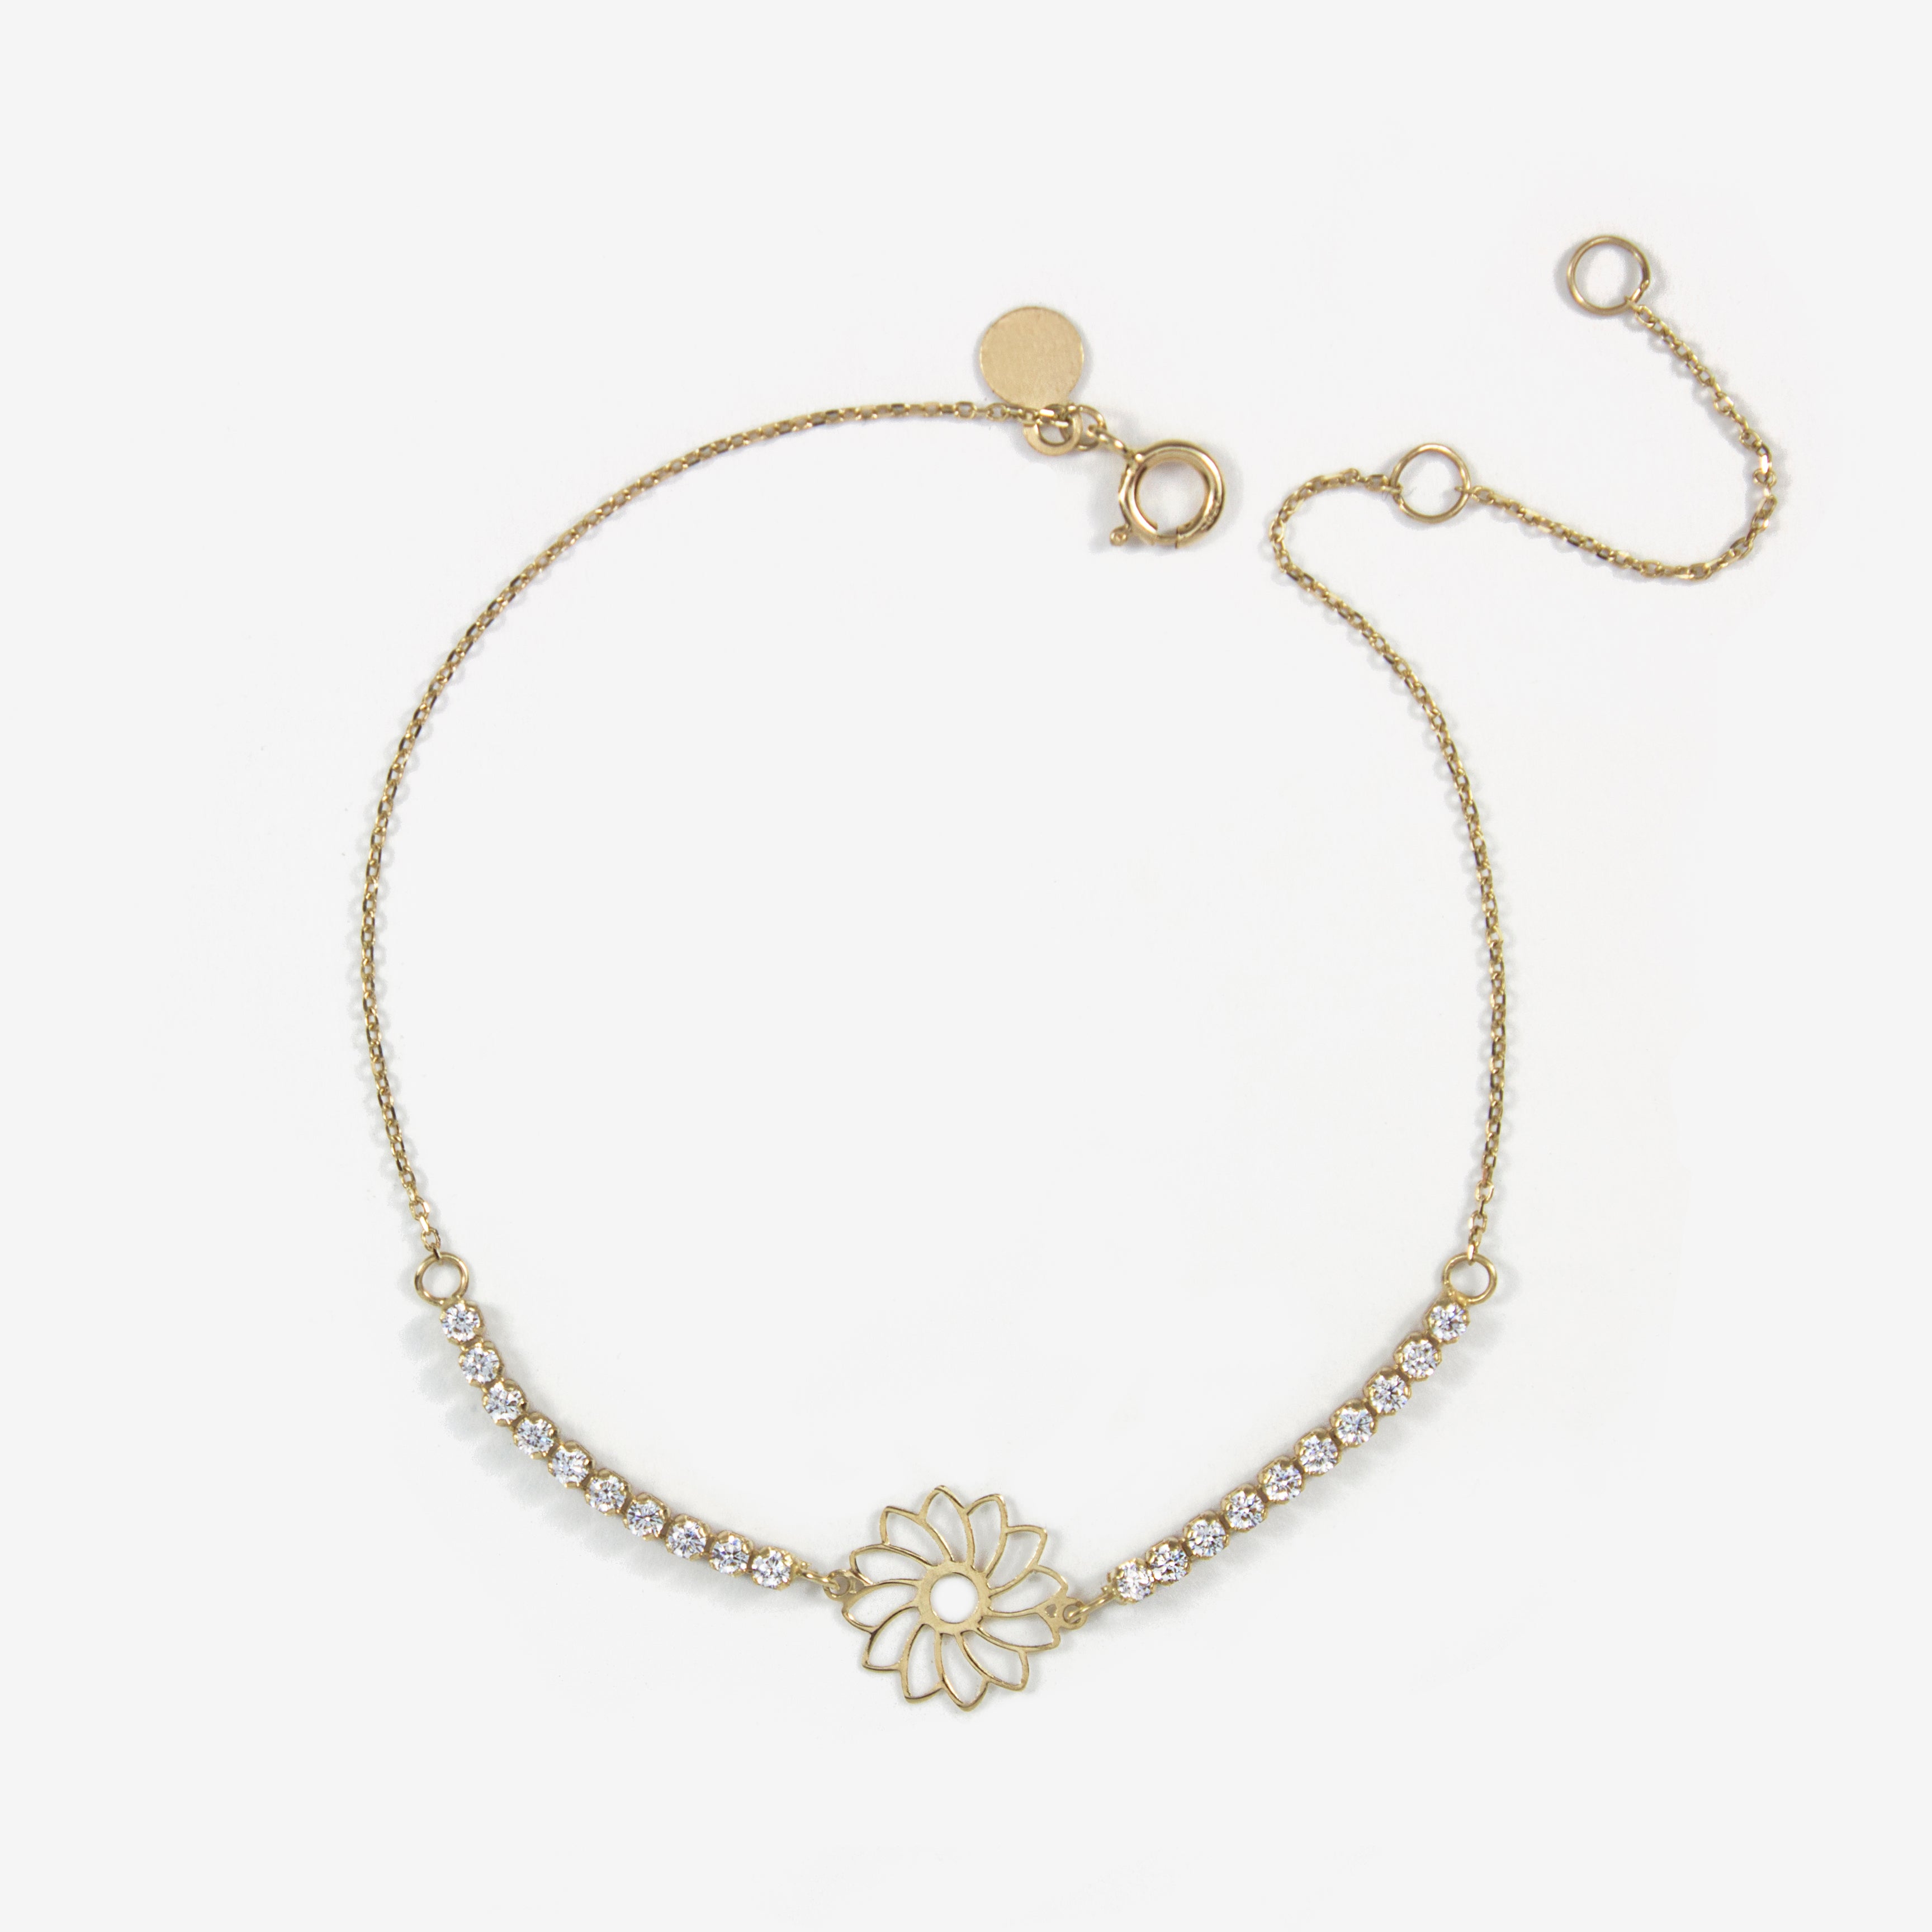 Rosey Zart Gold Bracelet - by Claurete Jewelry at Claurete.com